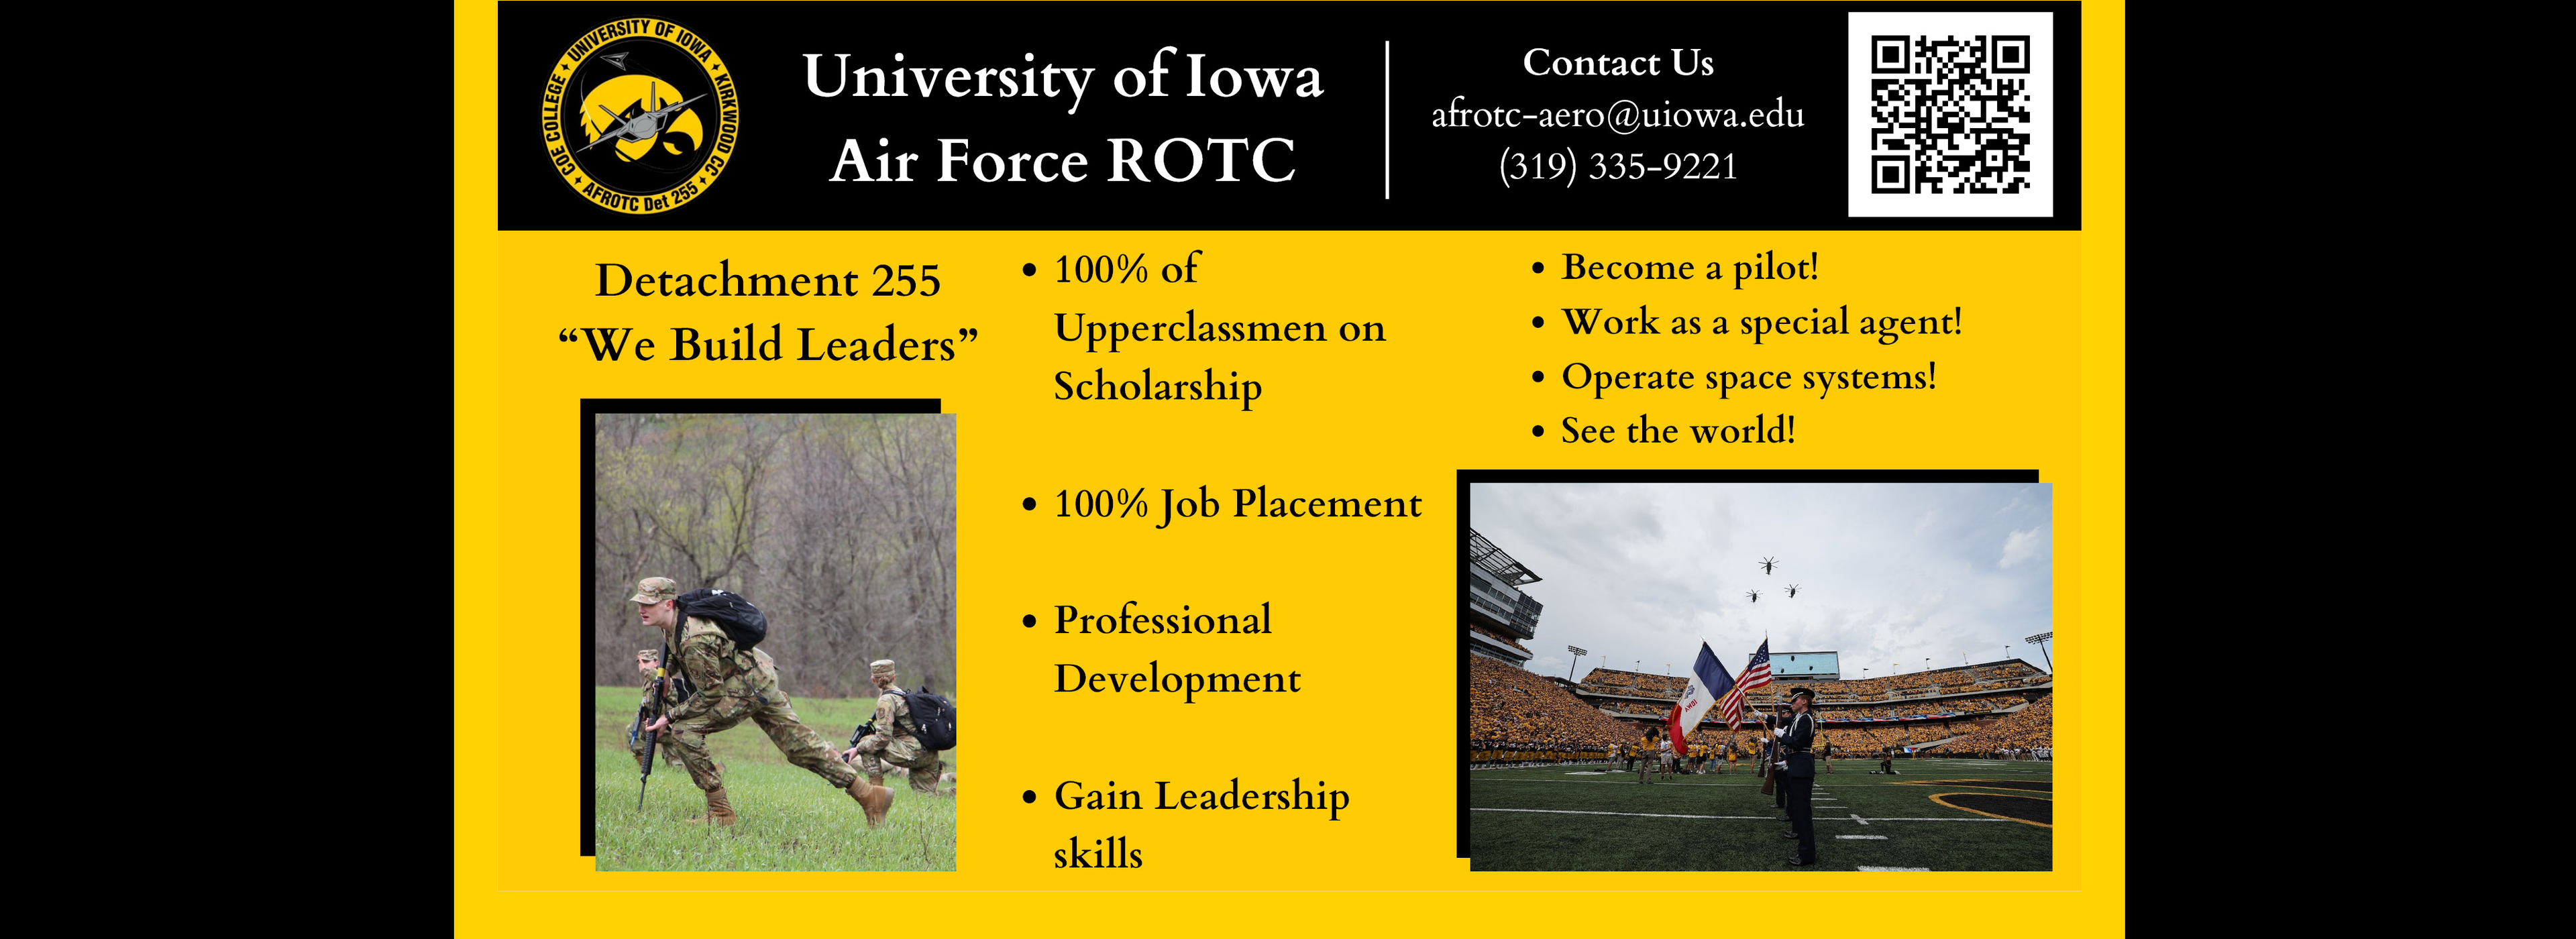 UI Air Force ROTC